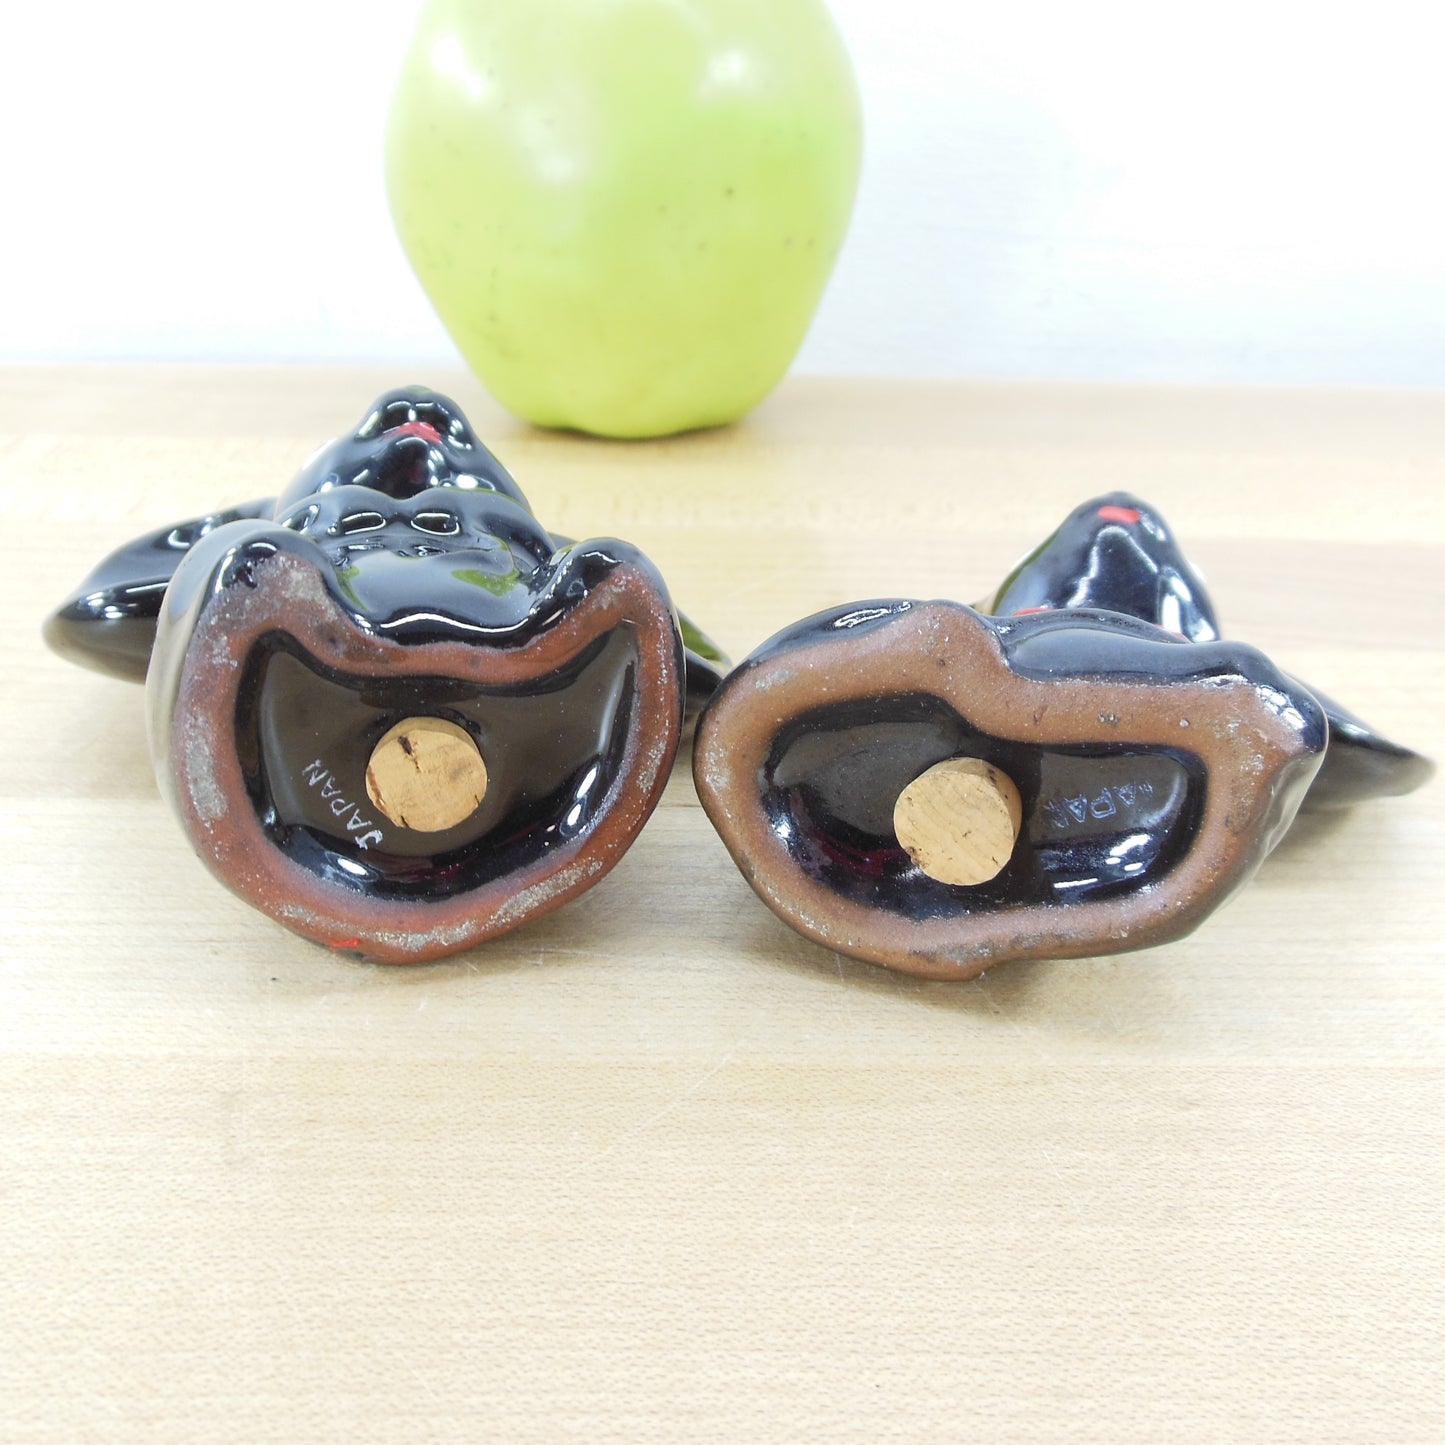 Salt & Pepper Shakers Ceramic Black Big Ear Mice Red Bows Japan corks